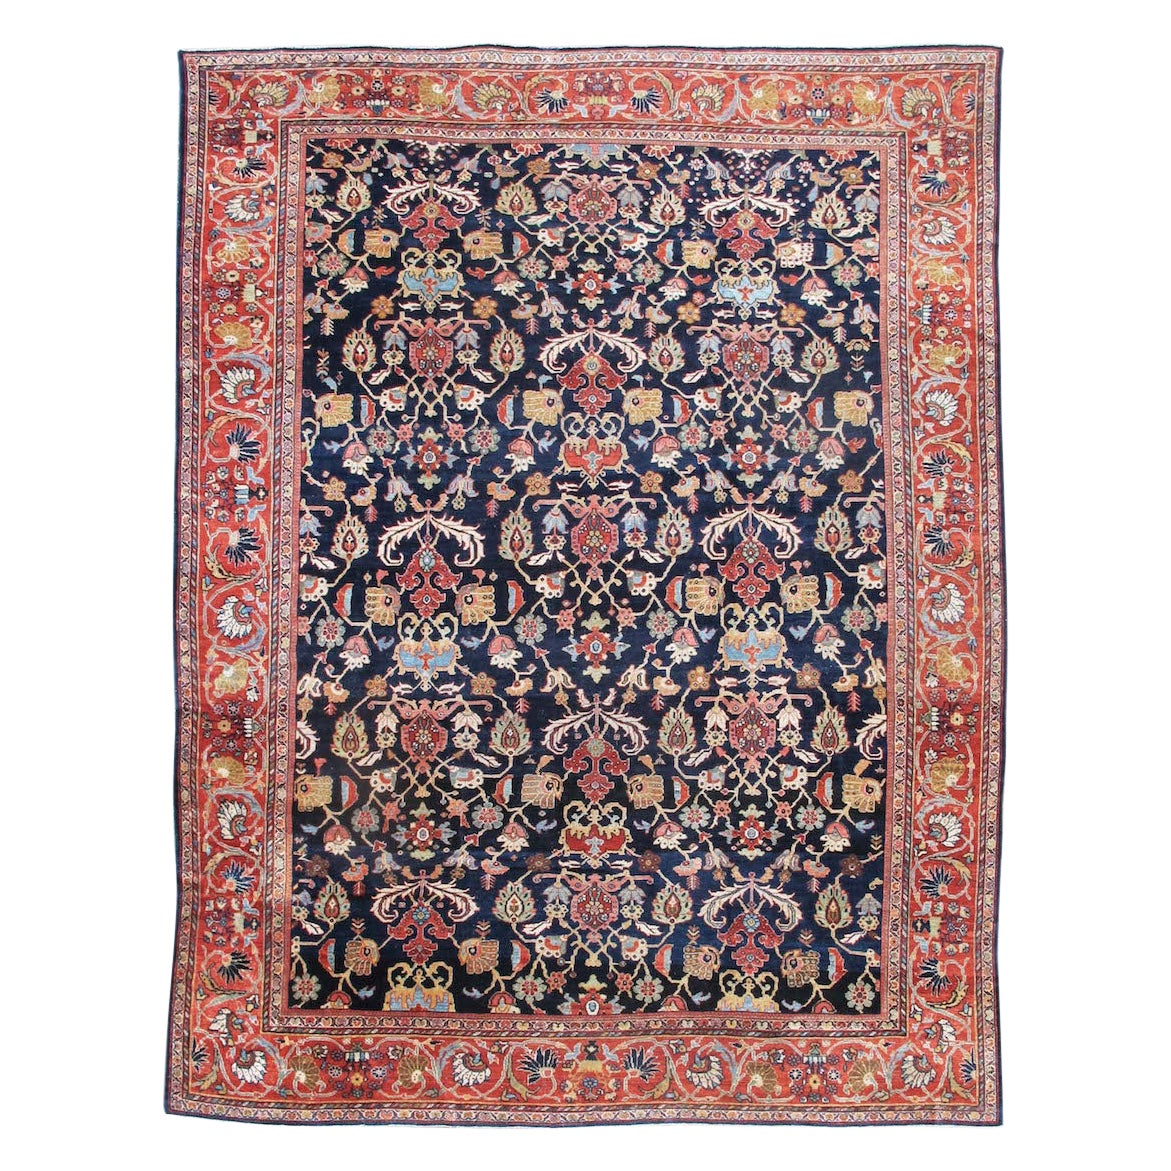 Mahal Carpet, Late 19th Century